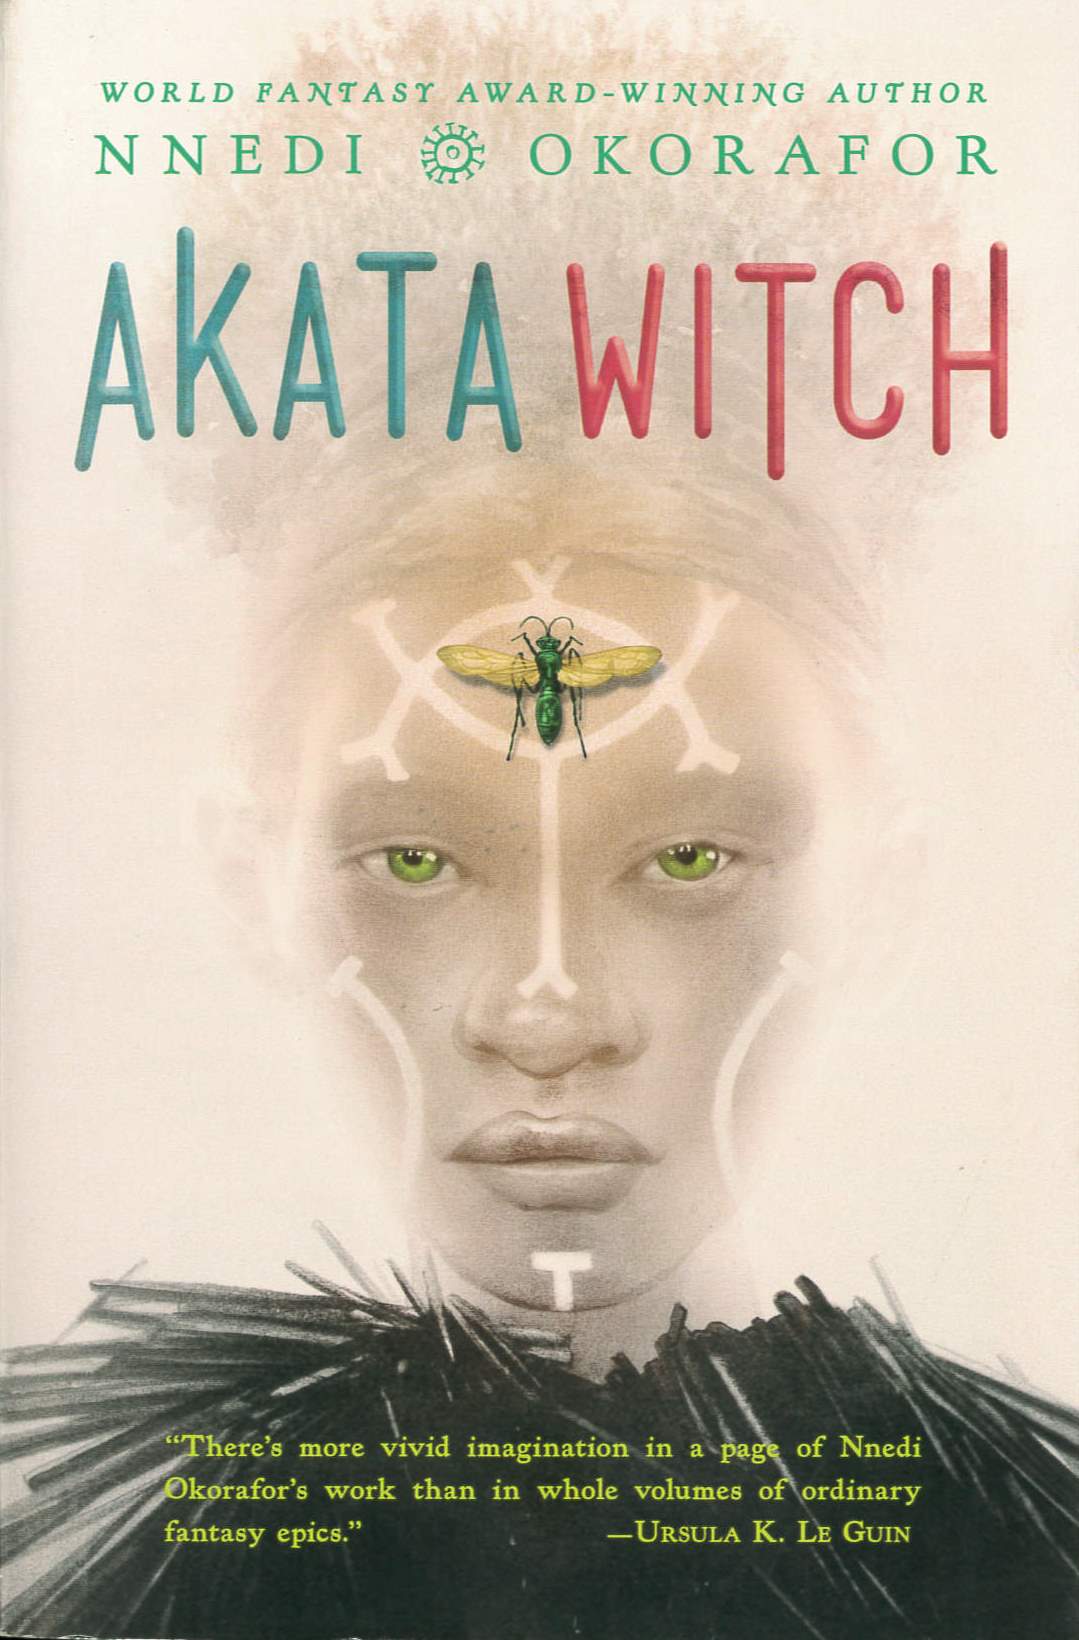 Akata witch /